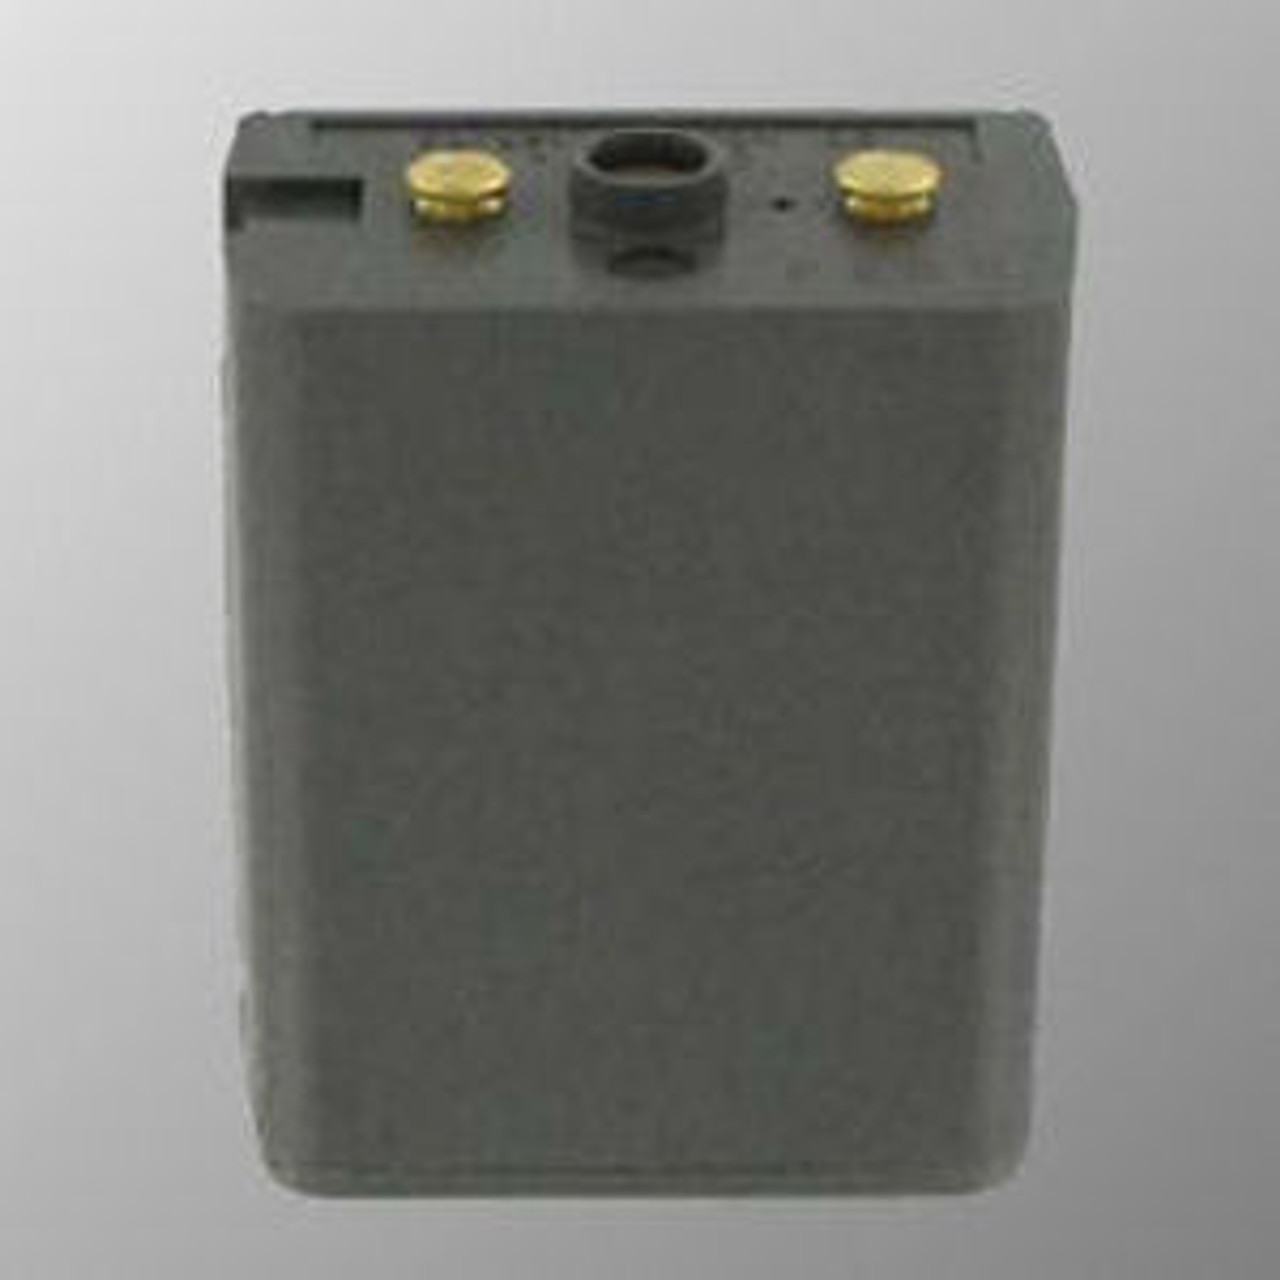 Bendix King LAA0171 Battery Upgrade - 2500mAh Ni-MH, Gray Case